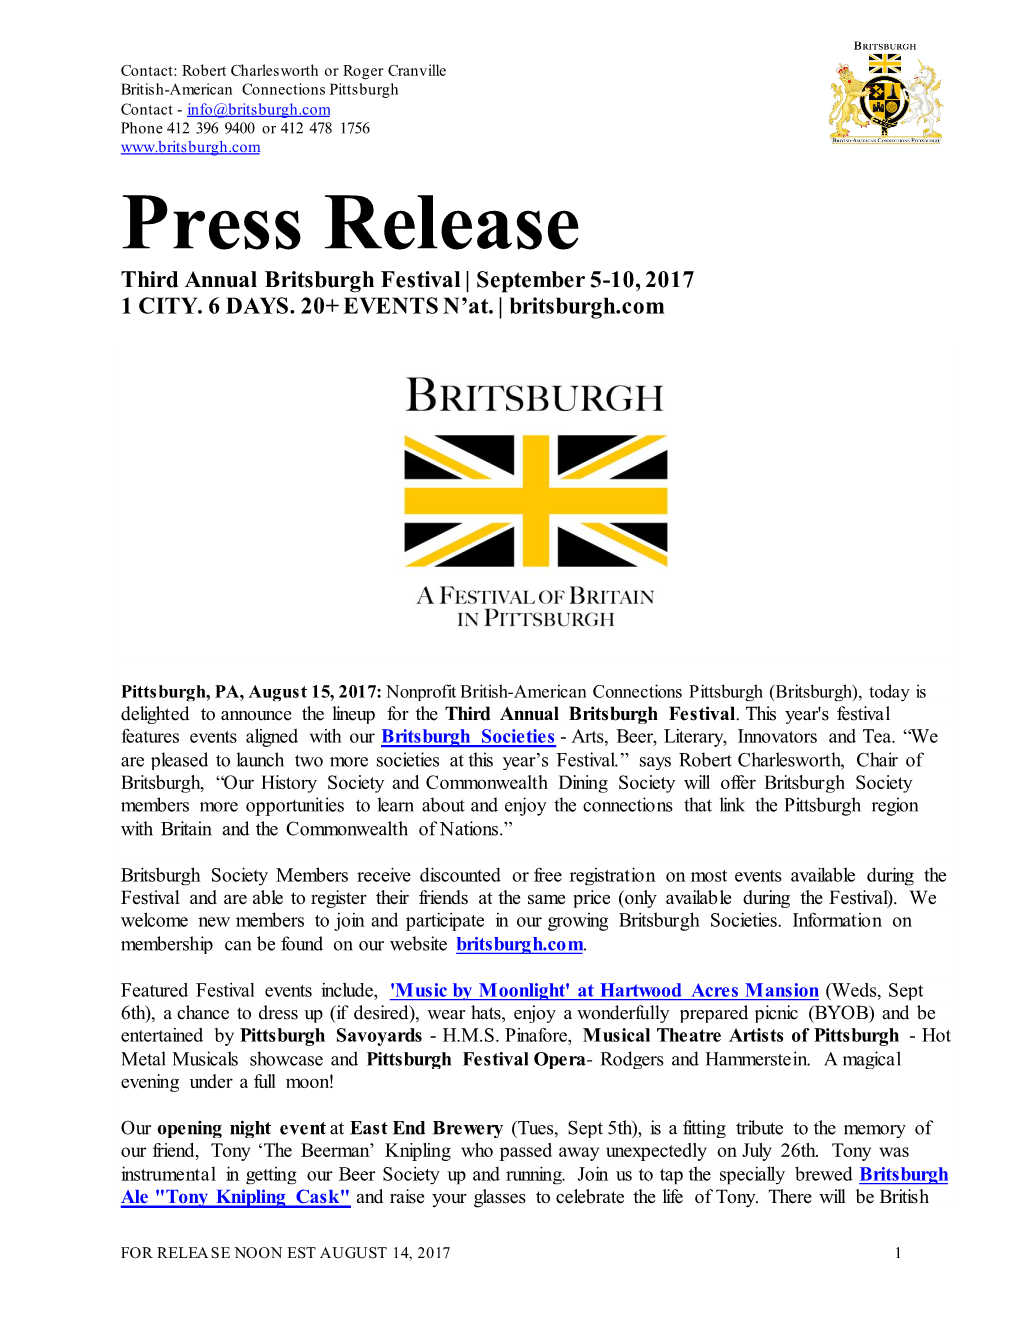 Press Release Third Annual Britsburgh Festival | September 5-10, 2017 1 CITY